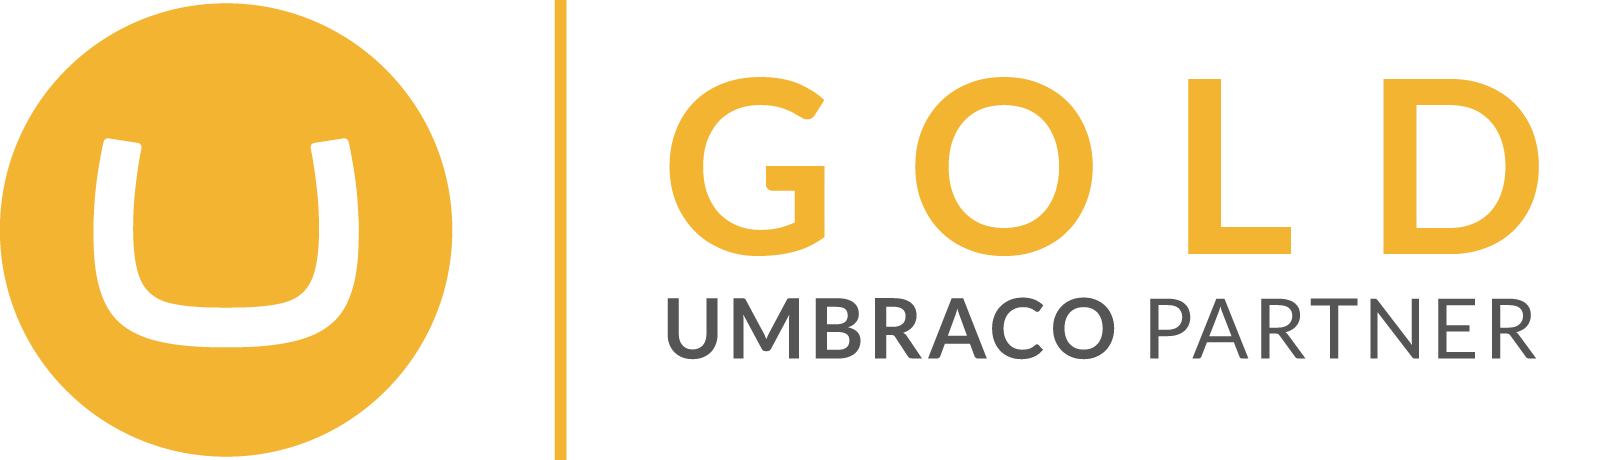 Umbraco Gold Partner logo